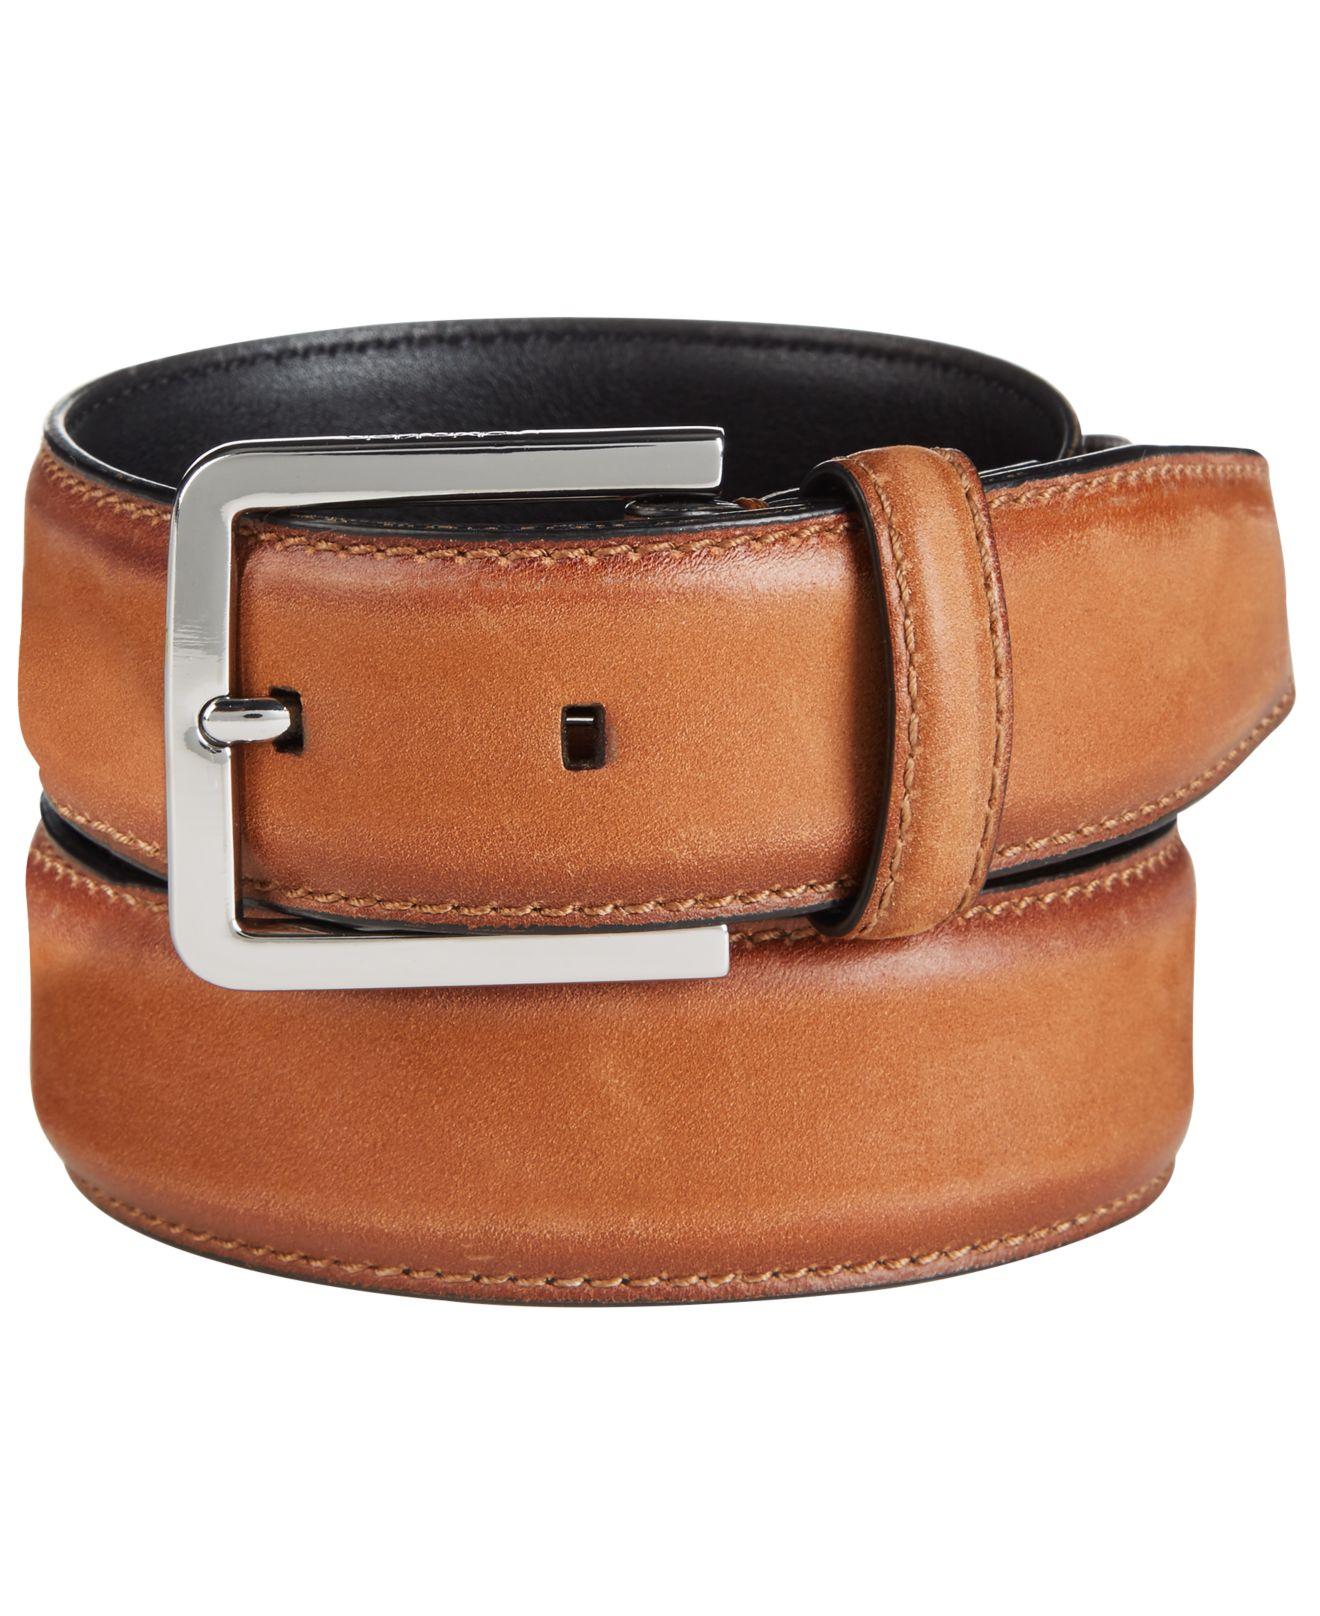 Lyst - Calvin Klein Burnished-edge Leather Belt in Brown for Men